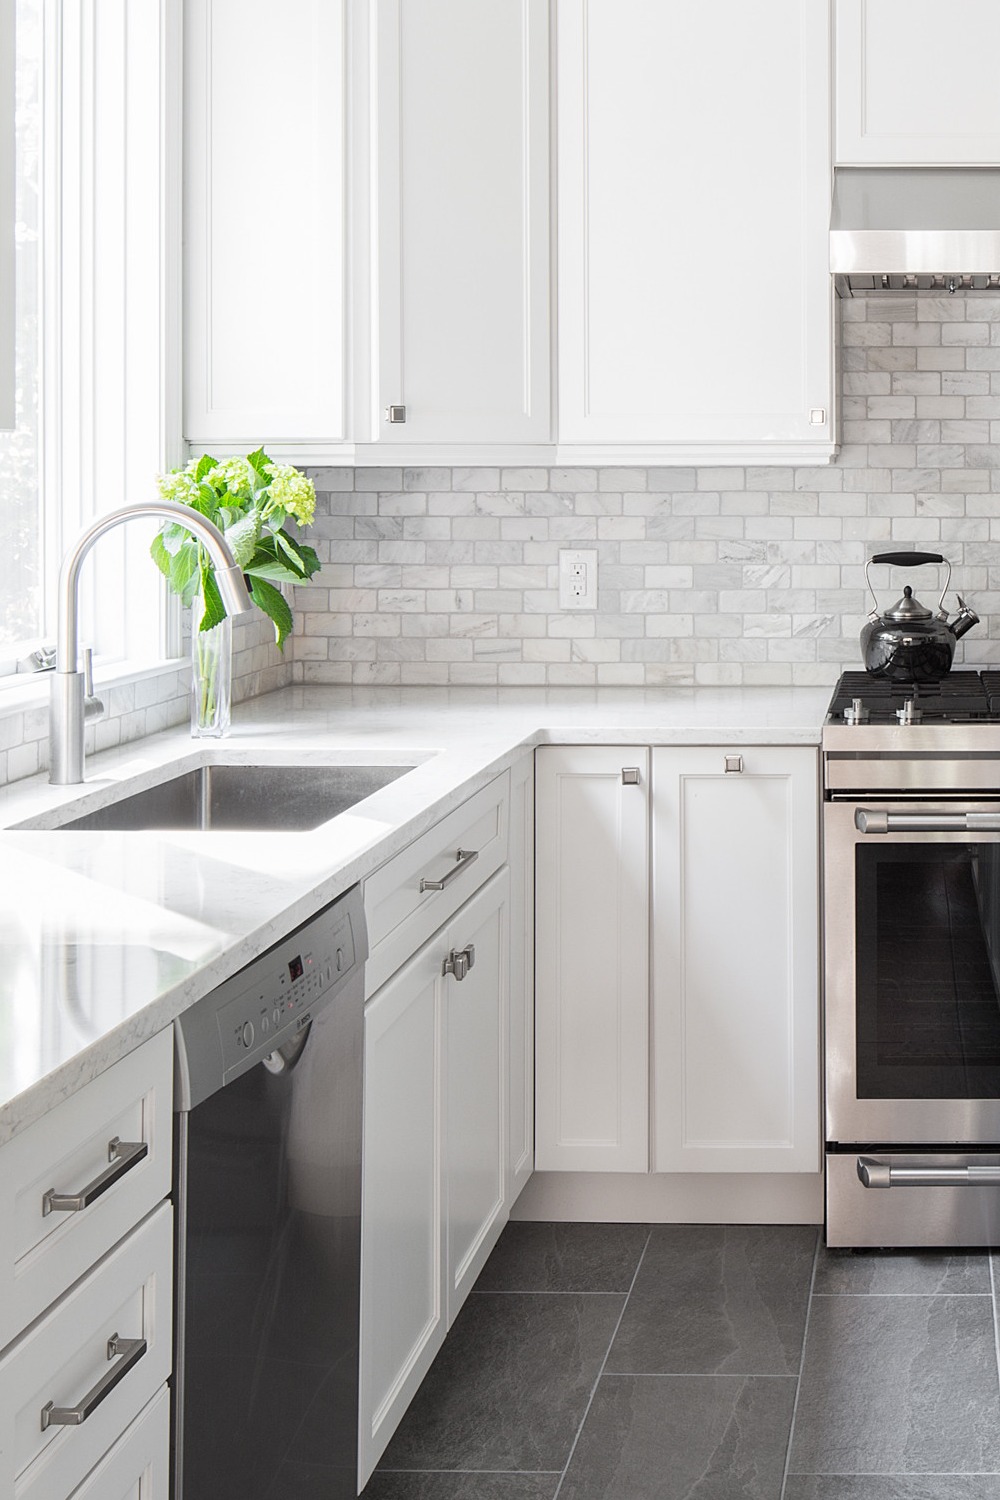 Honed Marble Backsplash Kitchen Backsplash White Countertops Perfect Mix Stone Modern White Cabinets Gray Floor